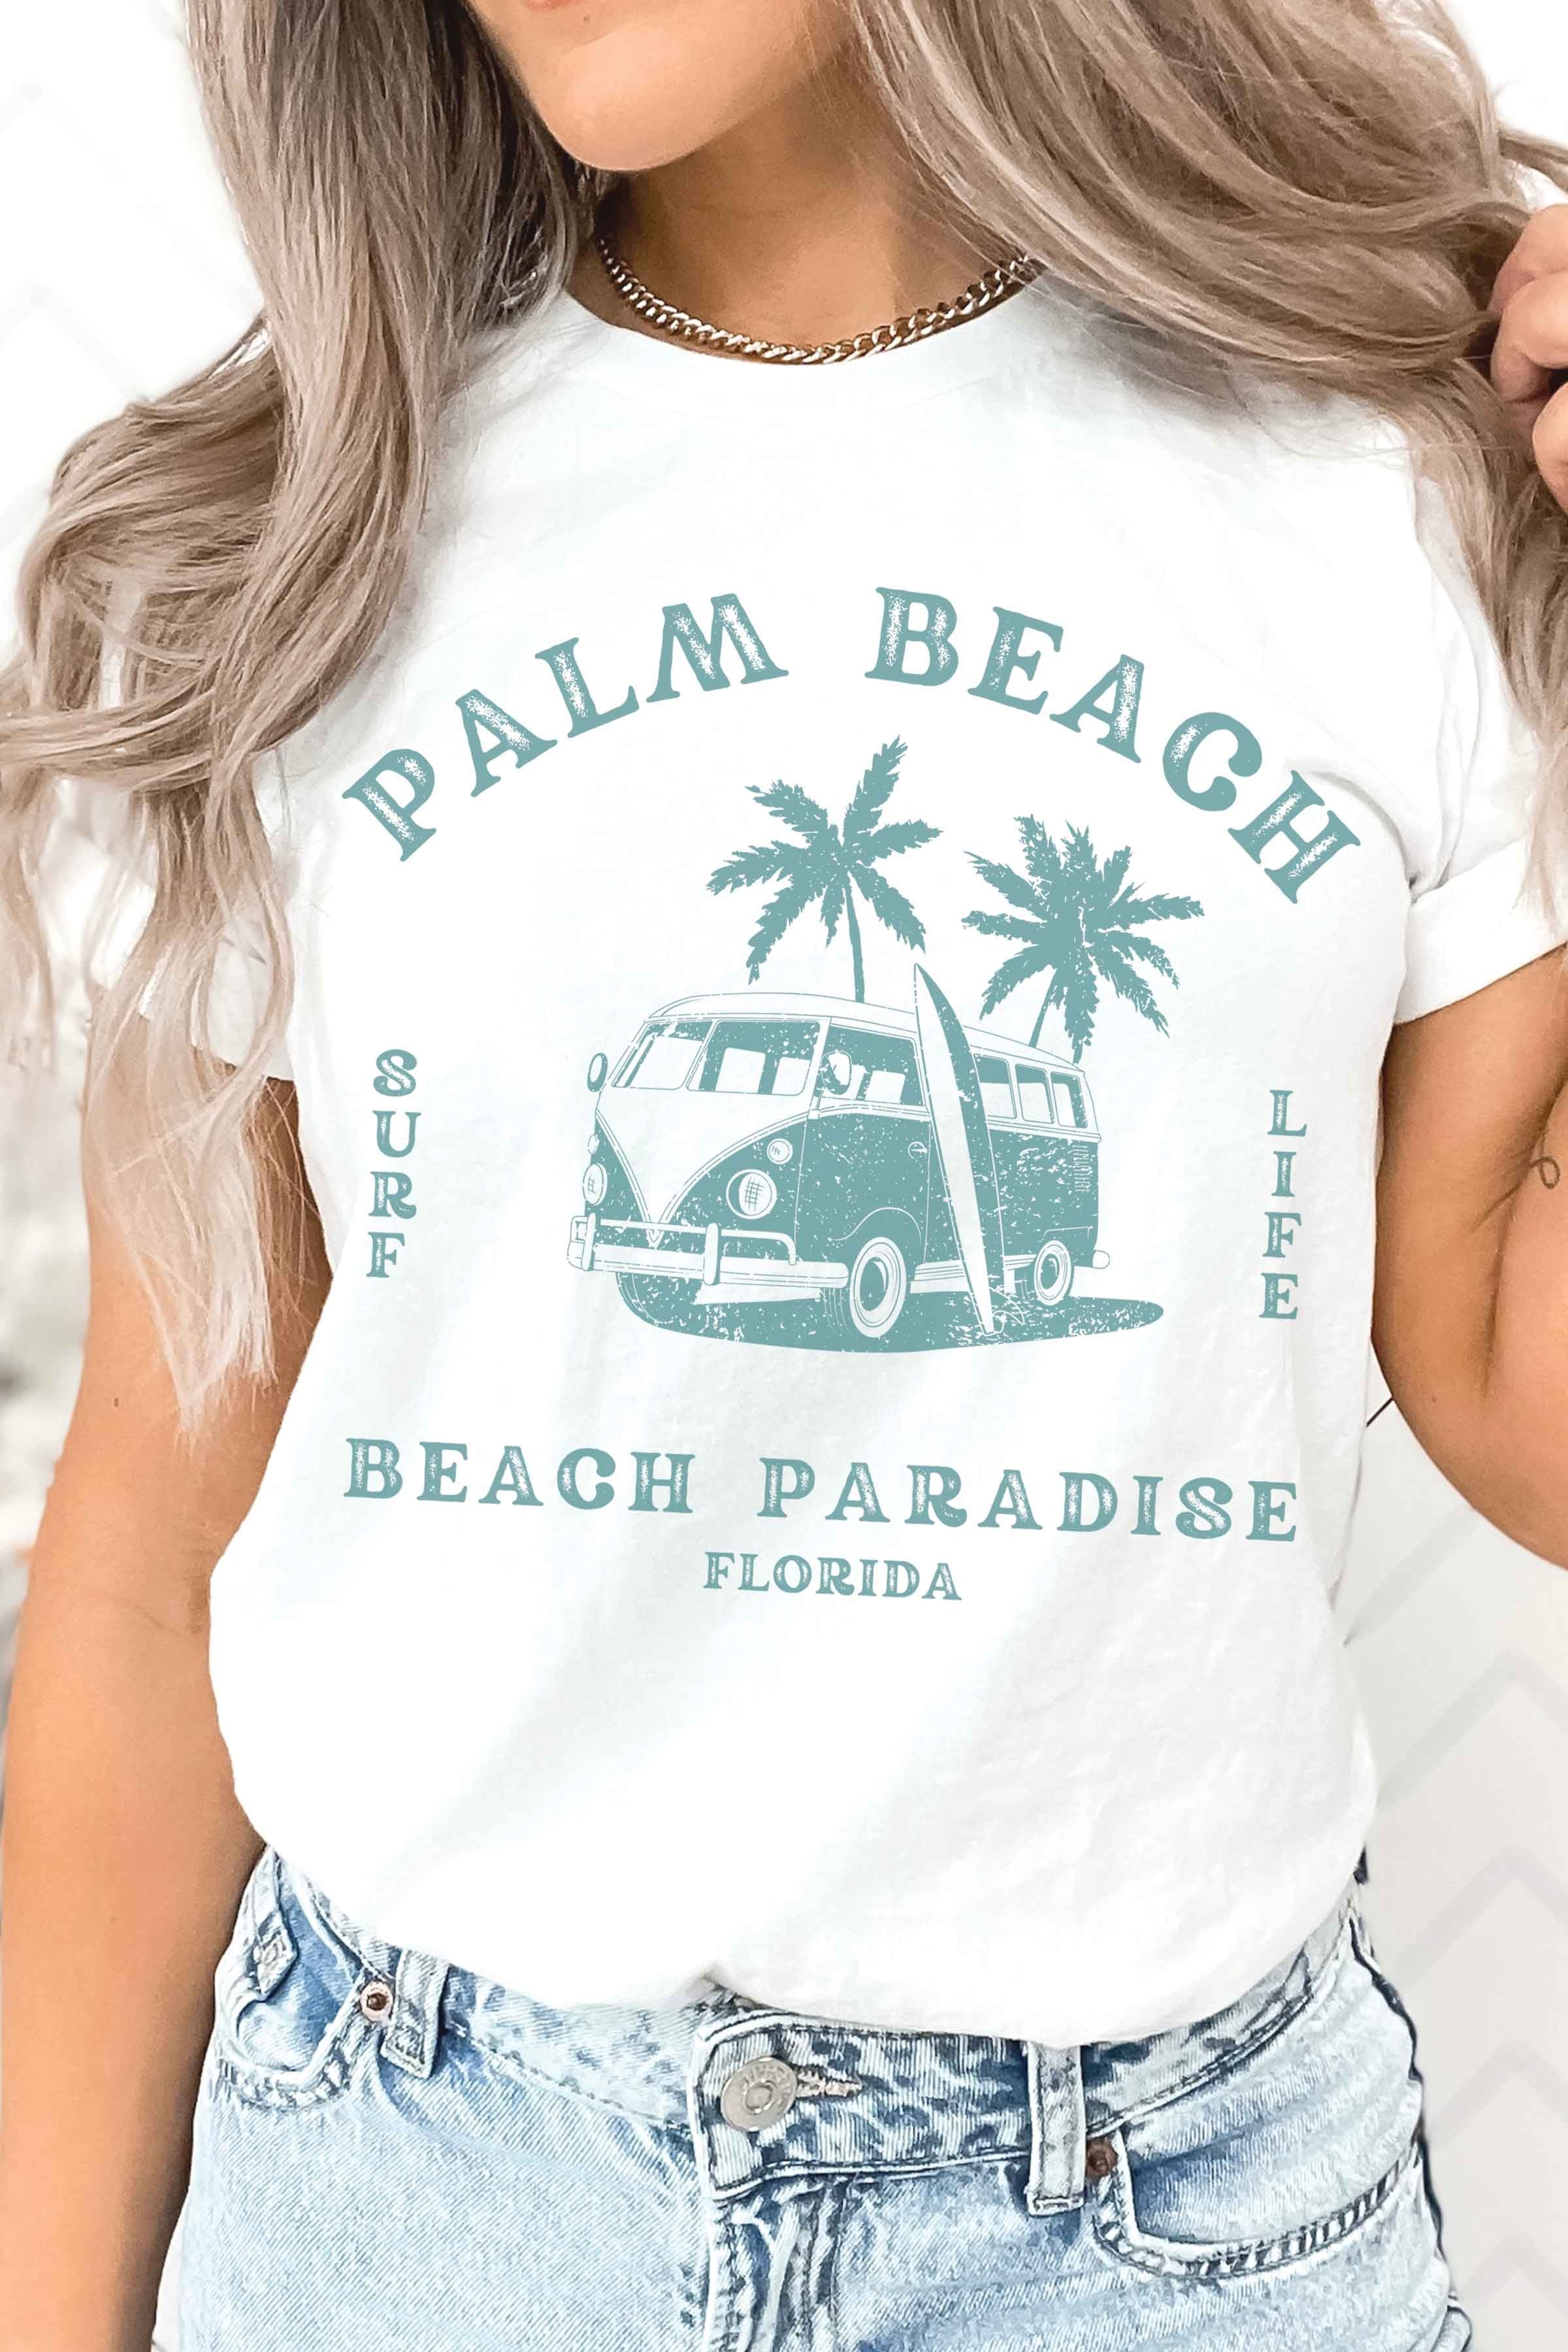 Palm Beach Graphic Tee | Graphic Tees – Autumn Grove Clothing